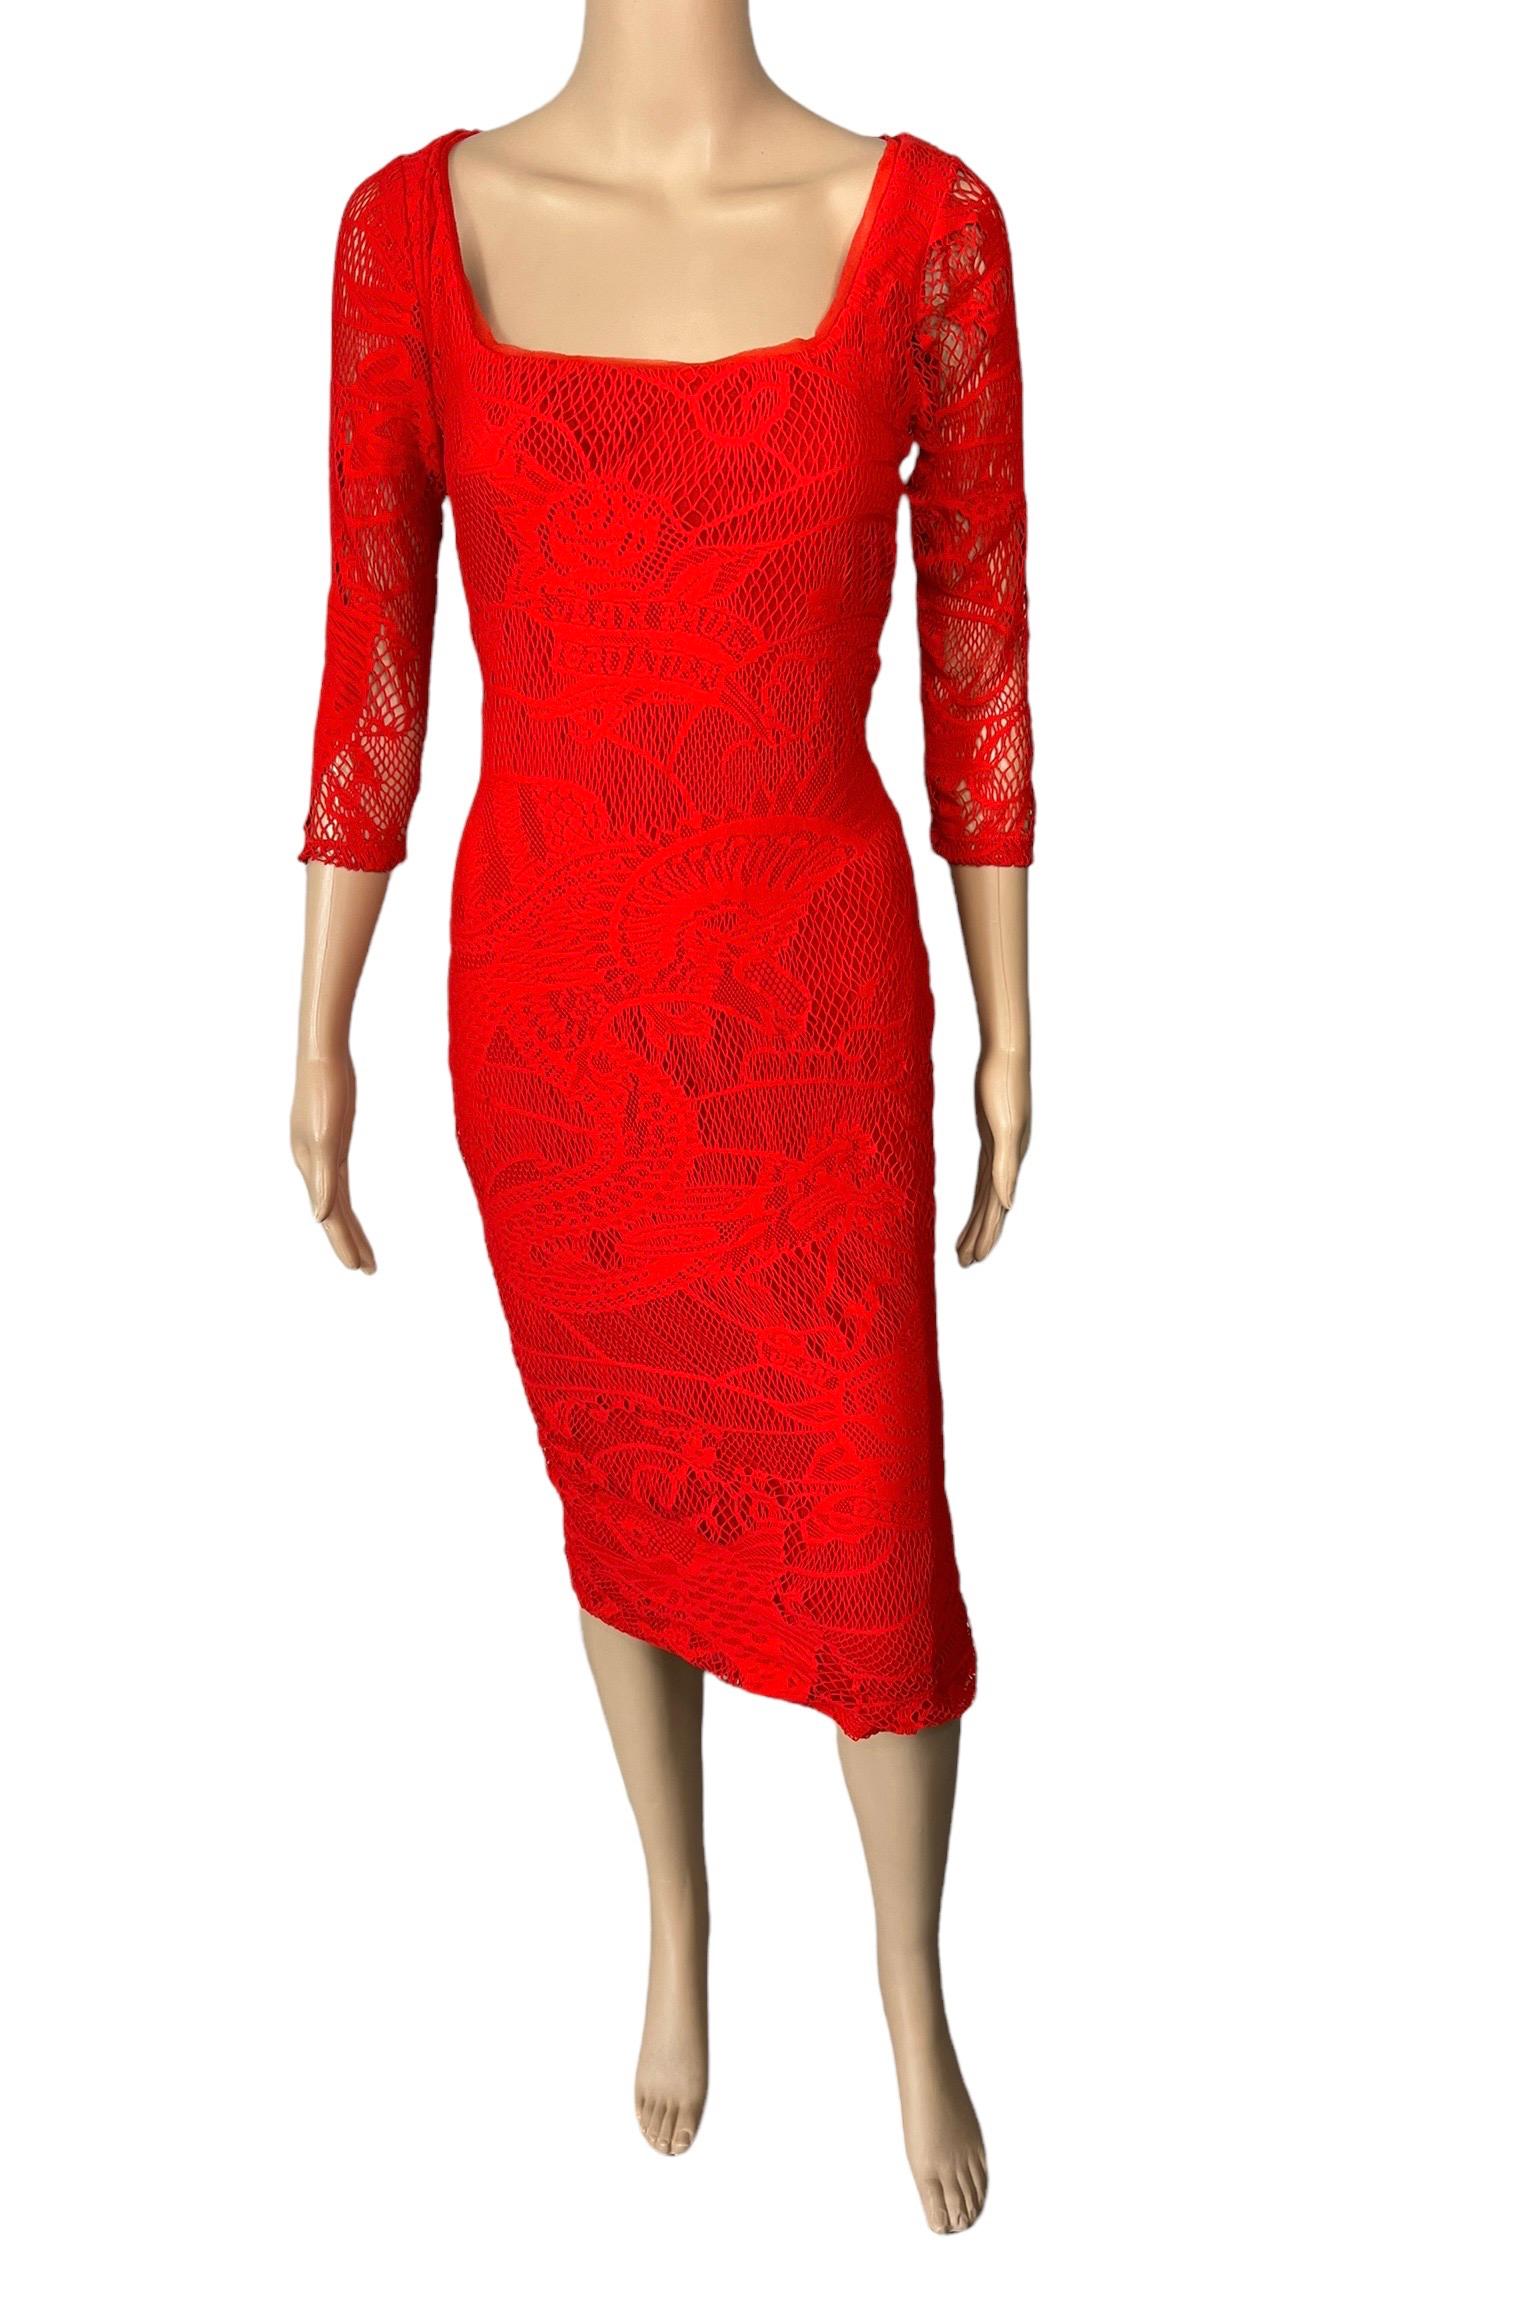 Jean Paul Gaultier Soleil Unworn Bodycon Open Knit Crochet Mesh Red Midi Dress In New Condition For Sale In Naples, FL